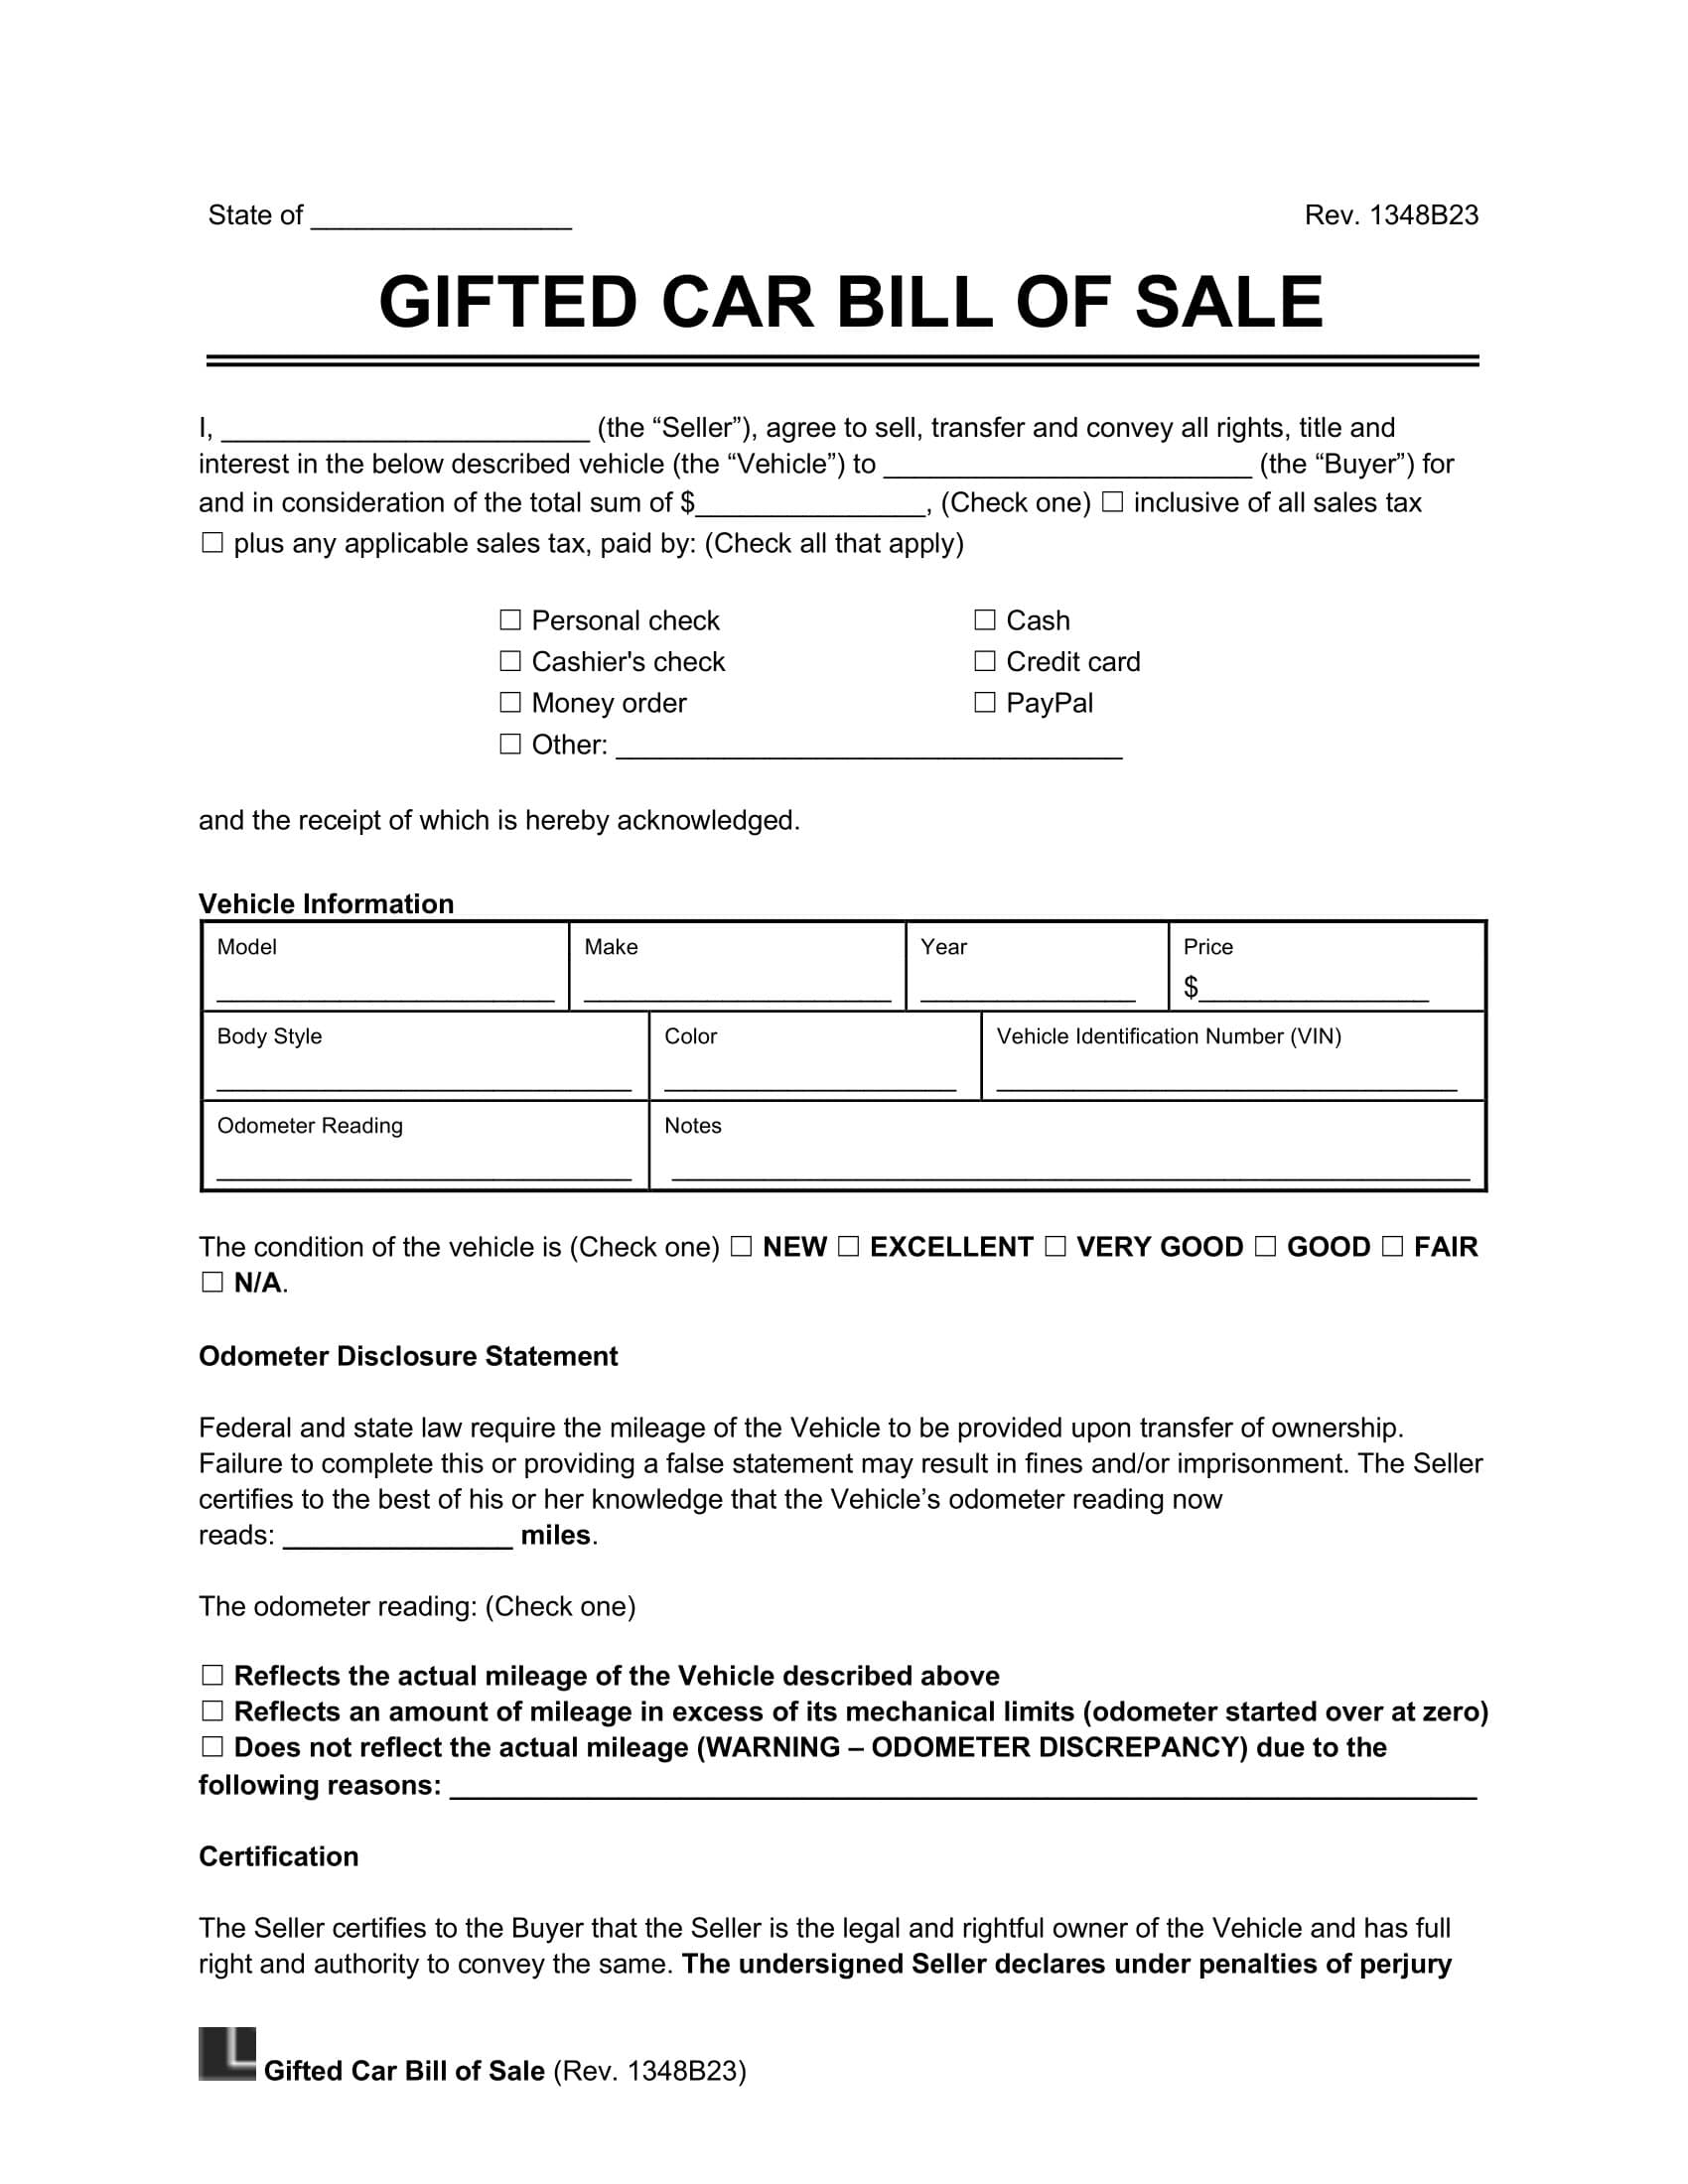 Gifted Car Bill of Sale screenshot